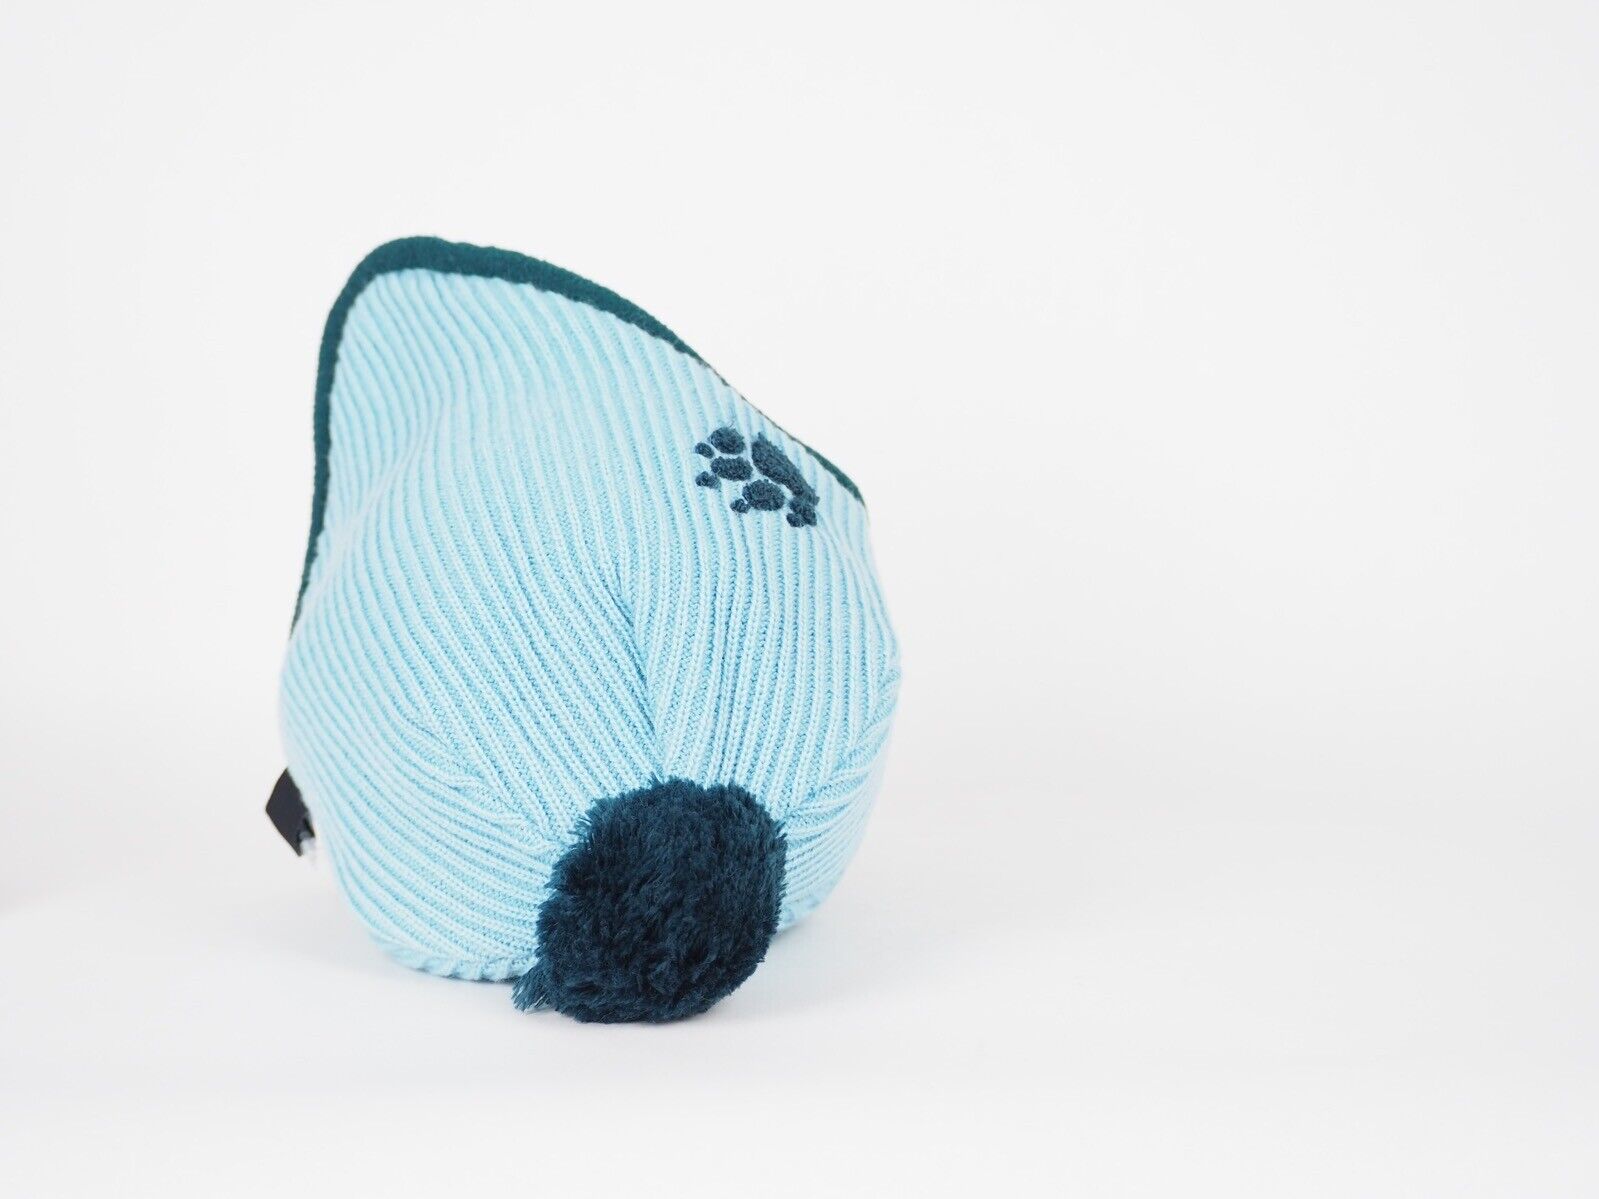 Kids Jack Wolfskin Knitted Pompom Hat 1901091 Mineral Blue Ear Cap Warm Beanie - London Top Style